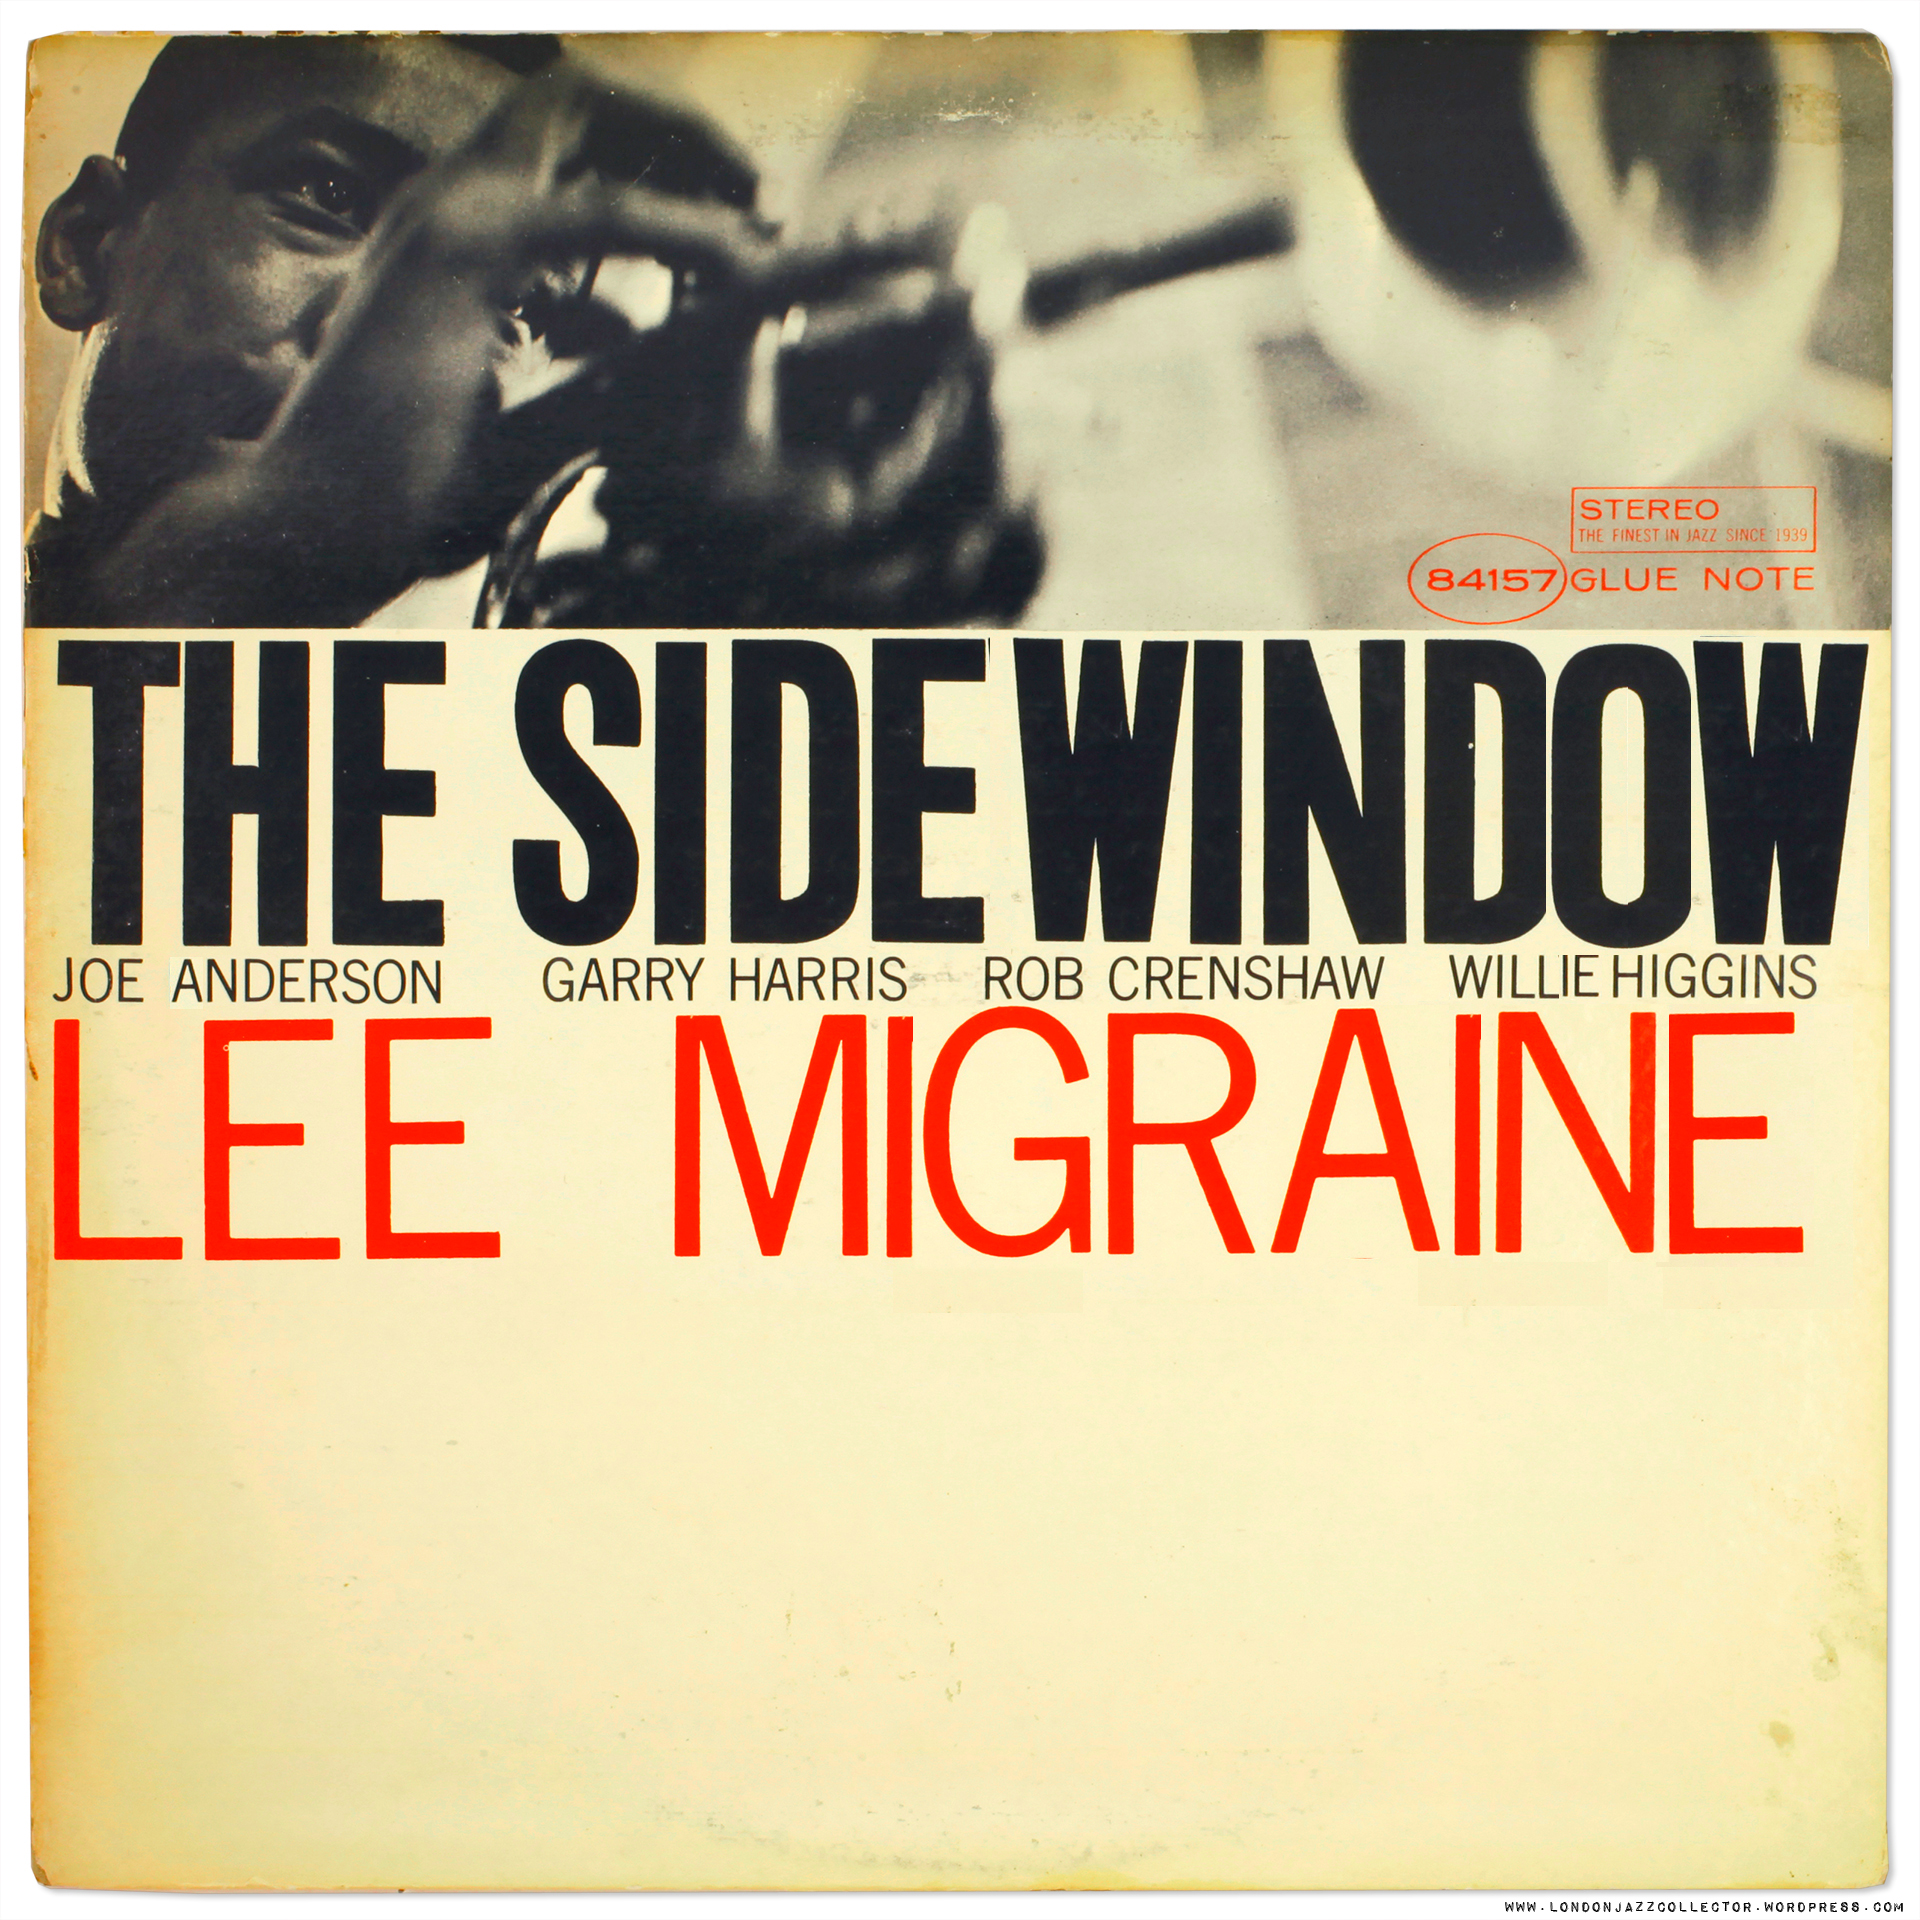 Lee Morgan: The Sidewinder (1963) Blue Note | LondonJazzCollector